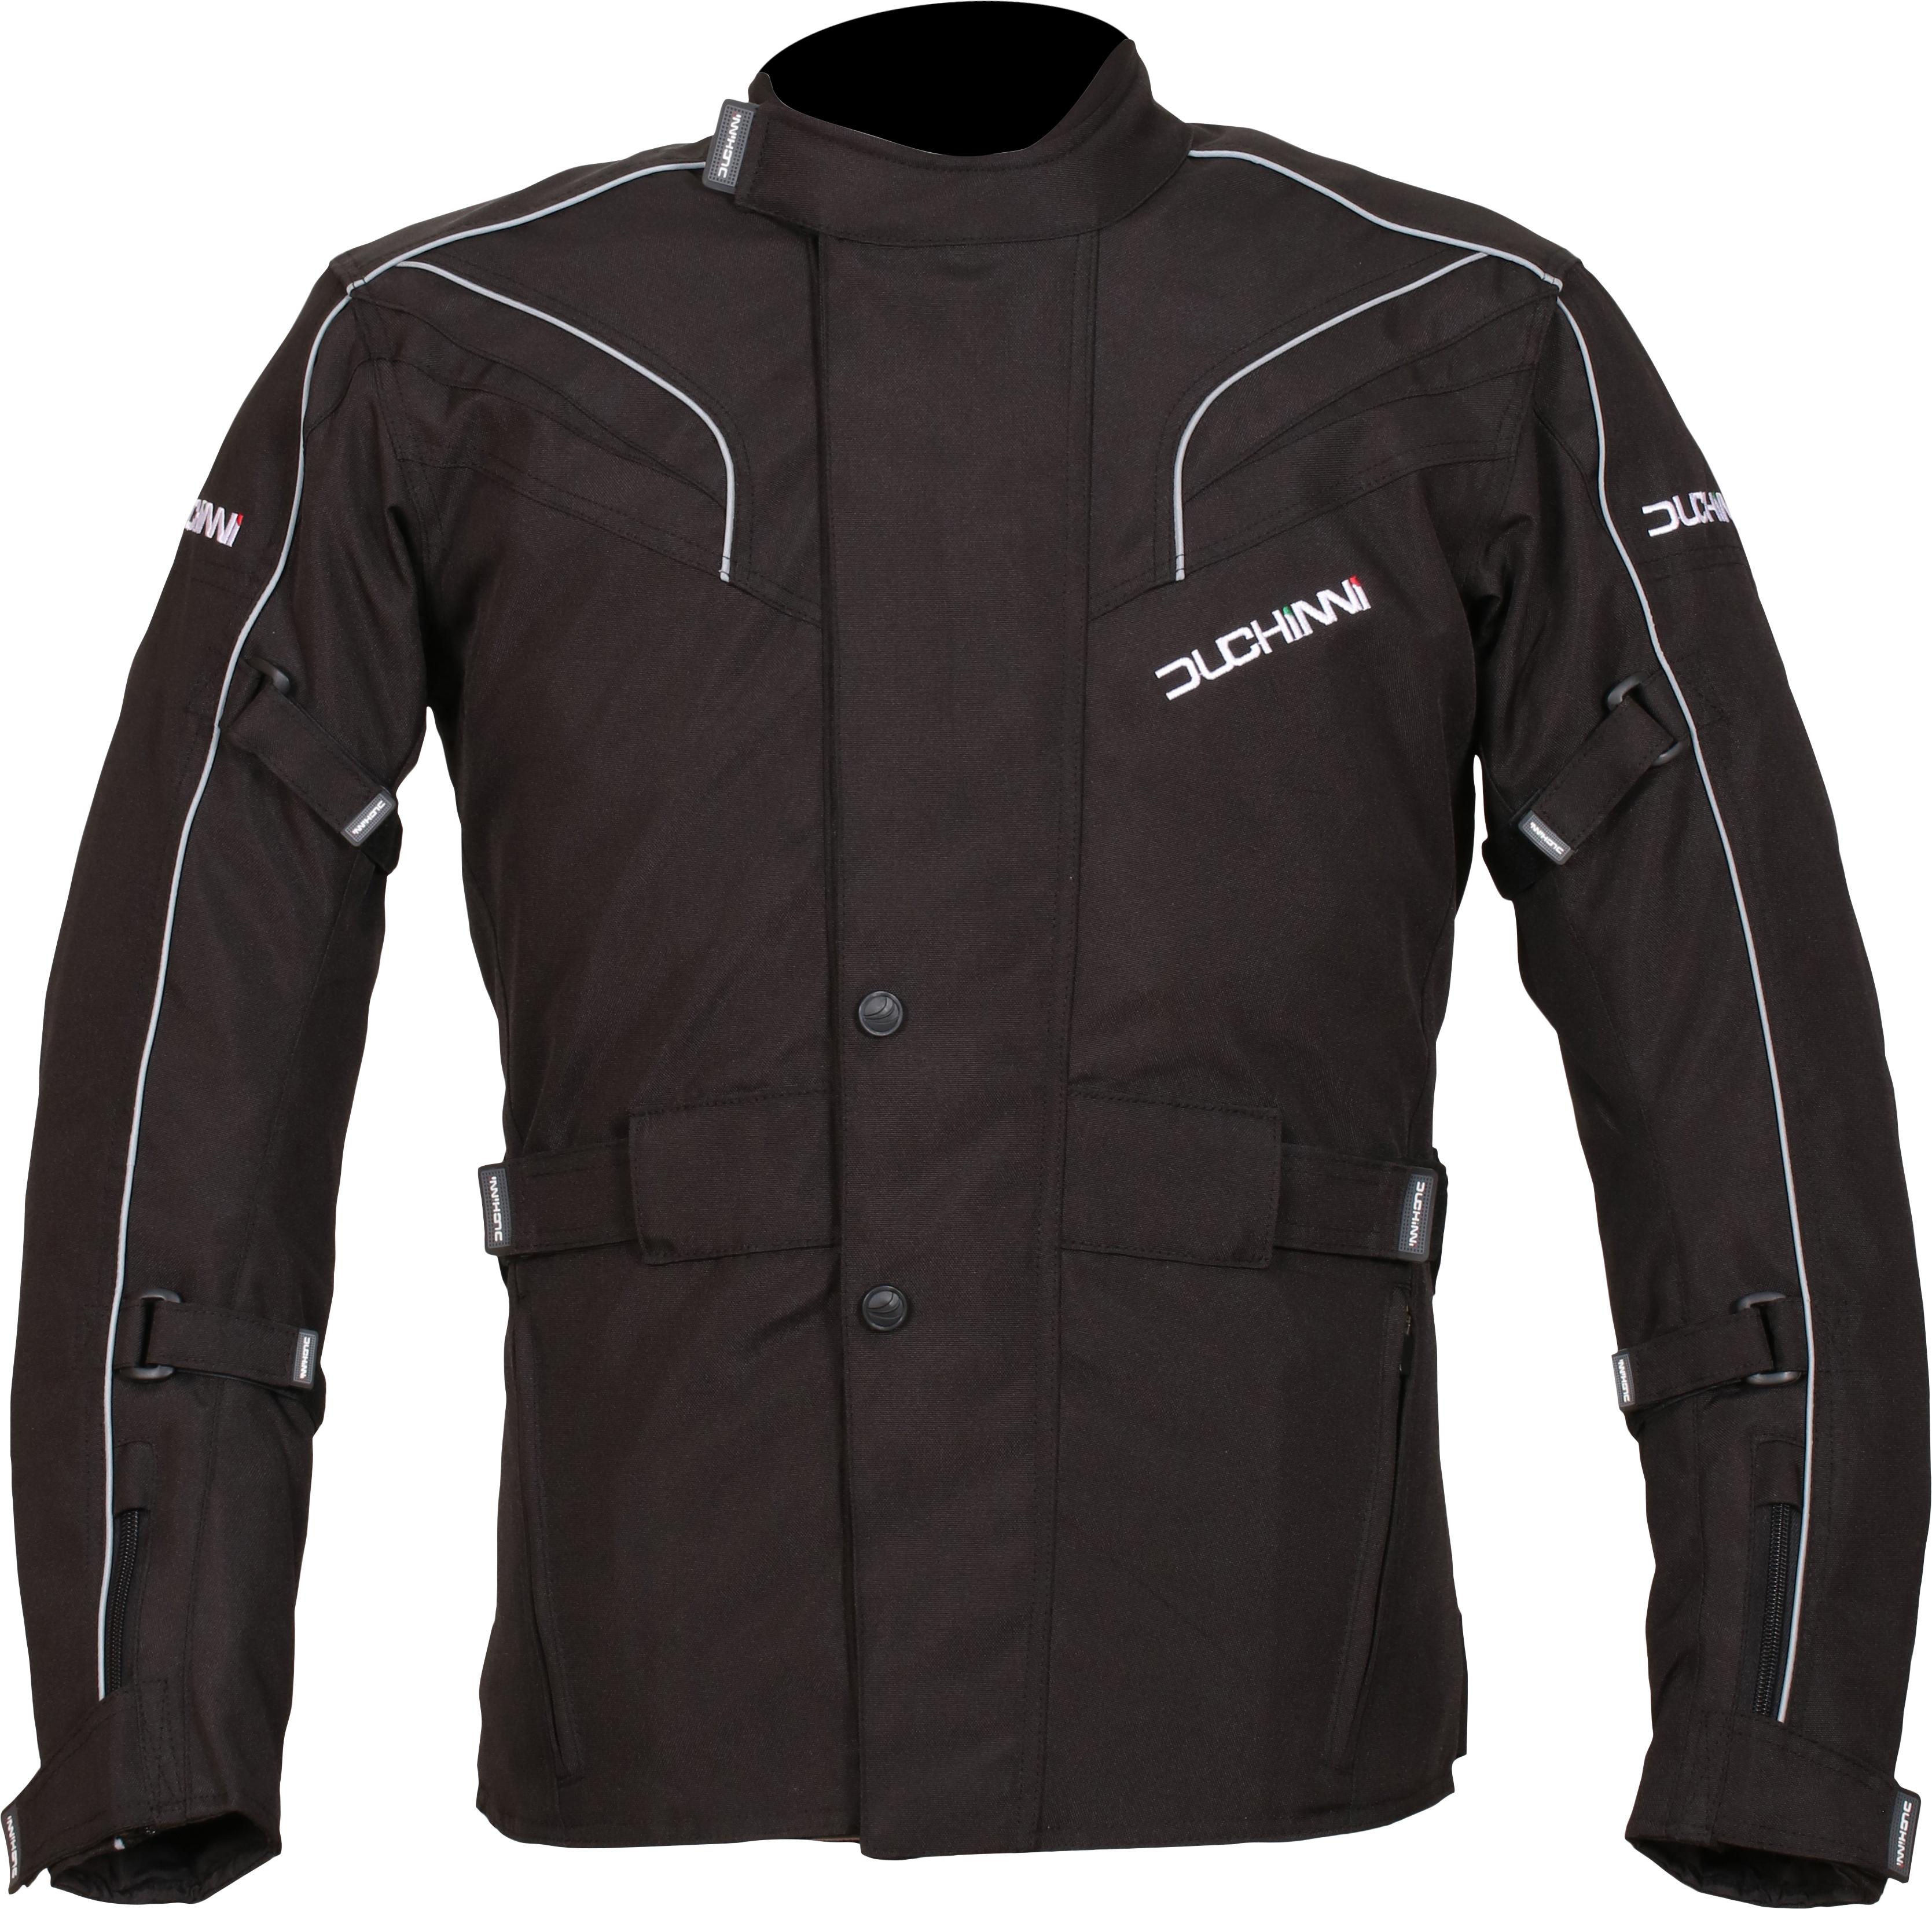 Duchinni Hurricane Motorcycle Jacket - Black, 4Xl